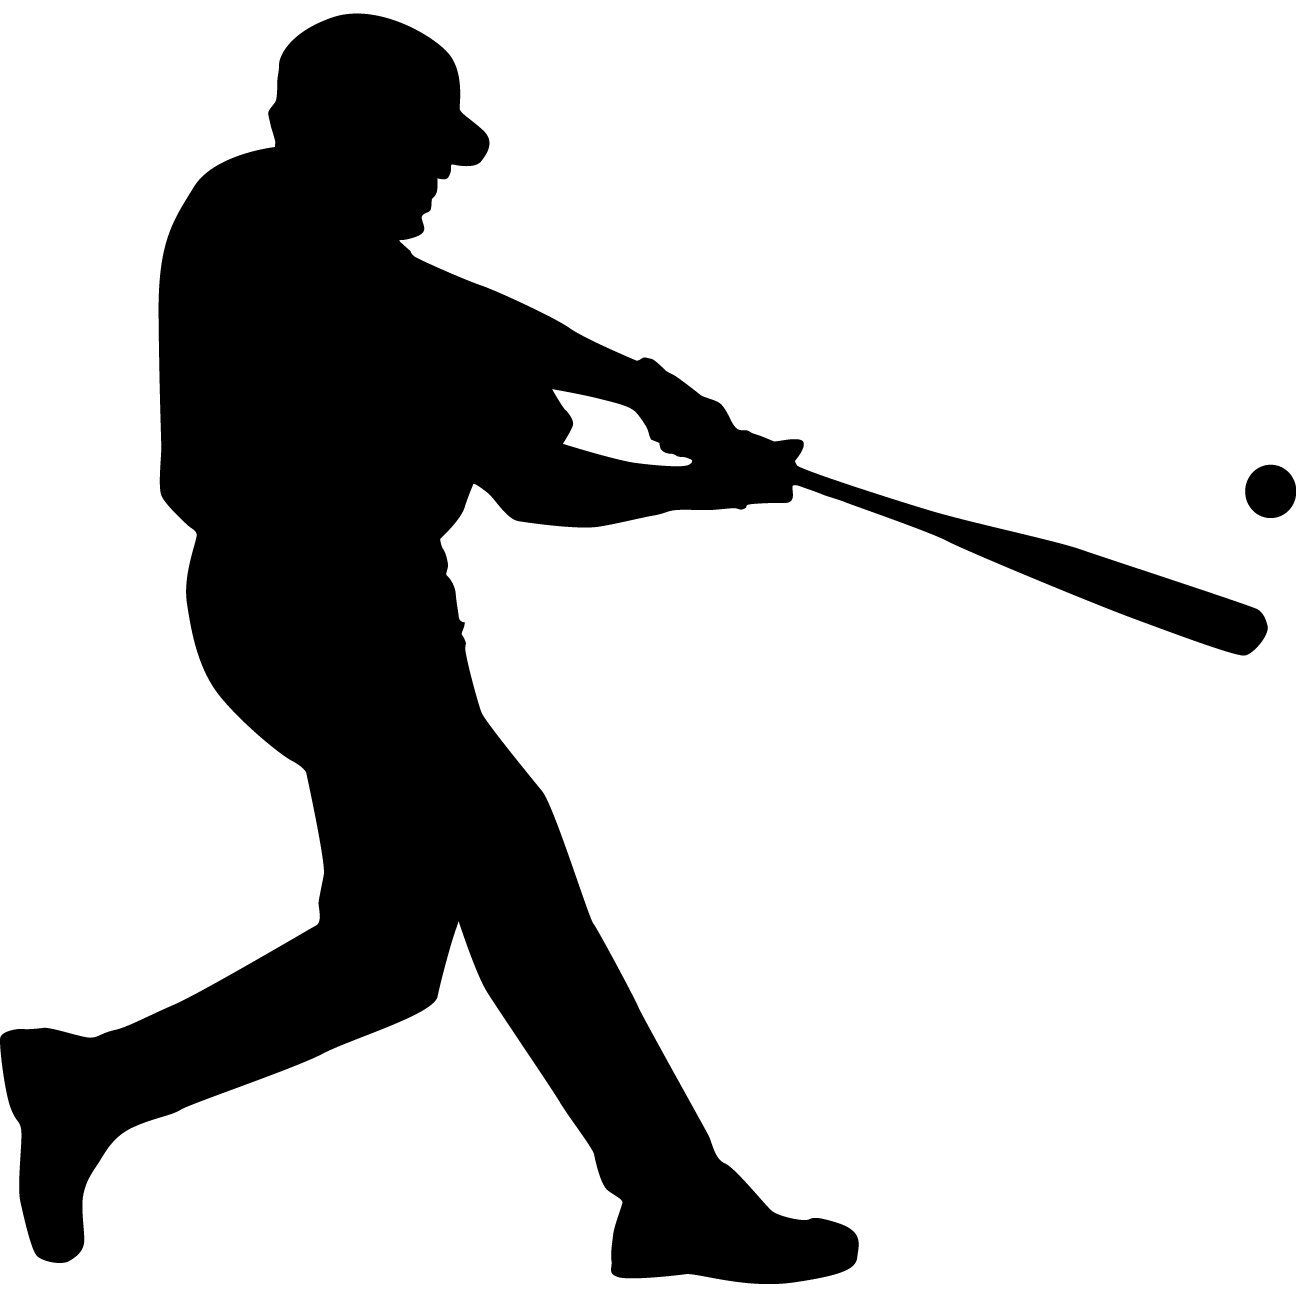 Baseball Player Clipart